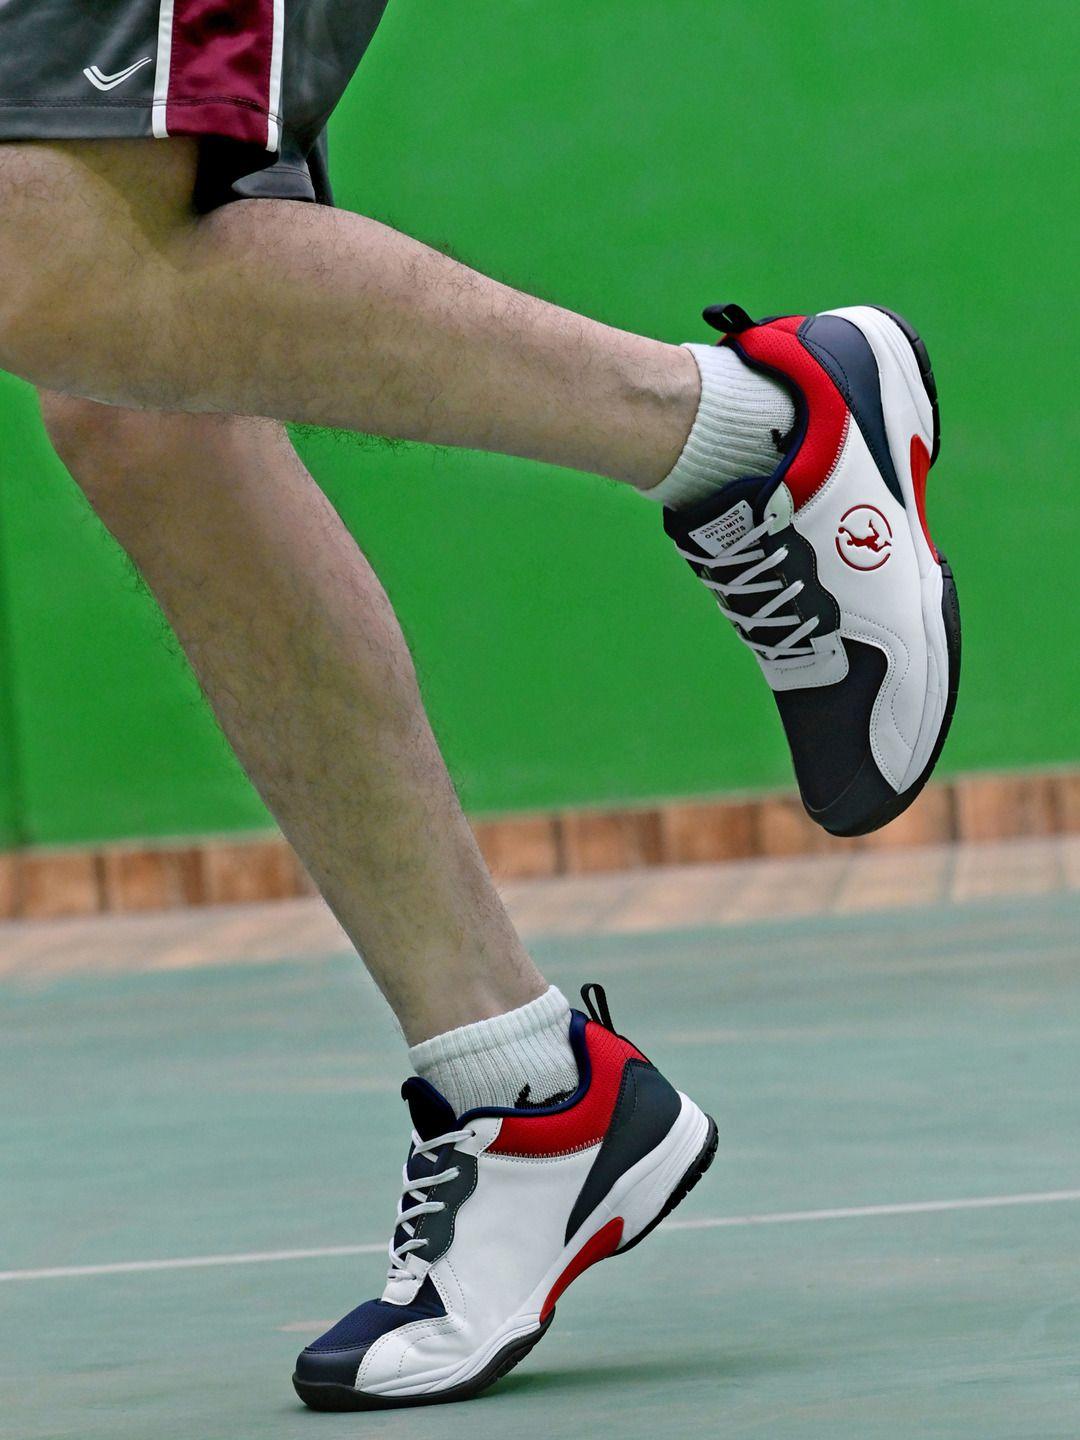 off limits men tennis non-marking sports shoes